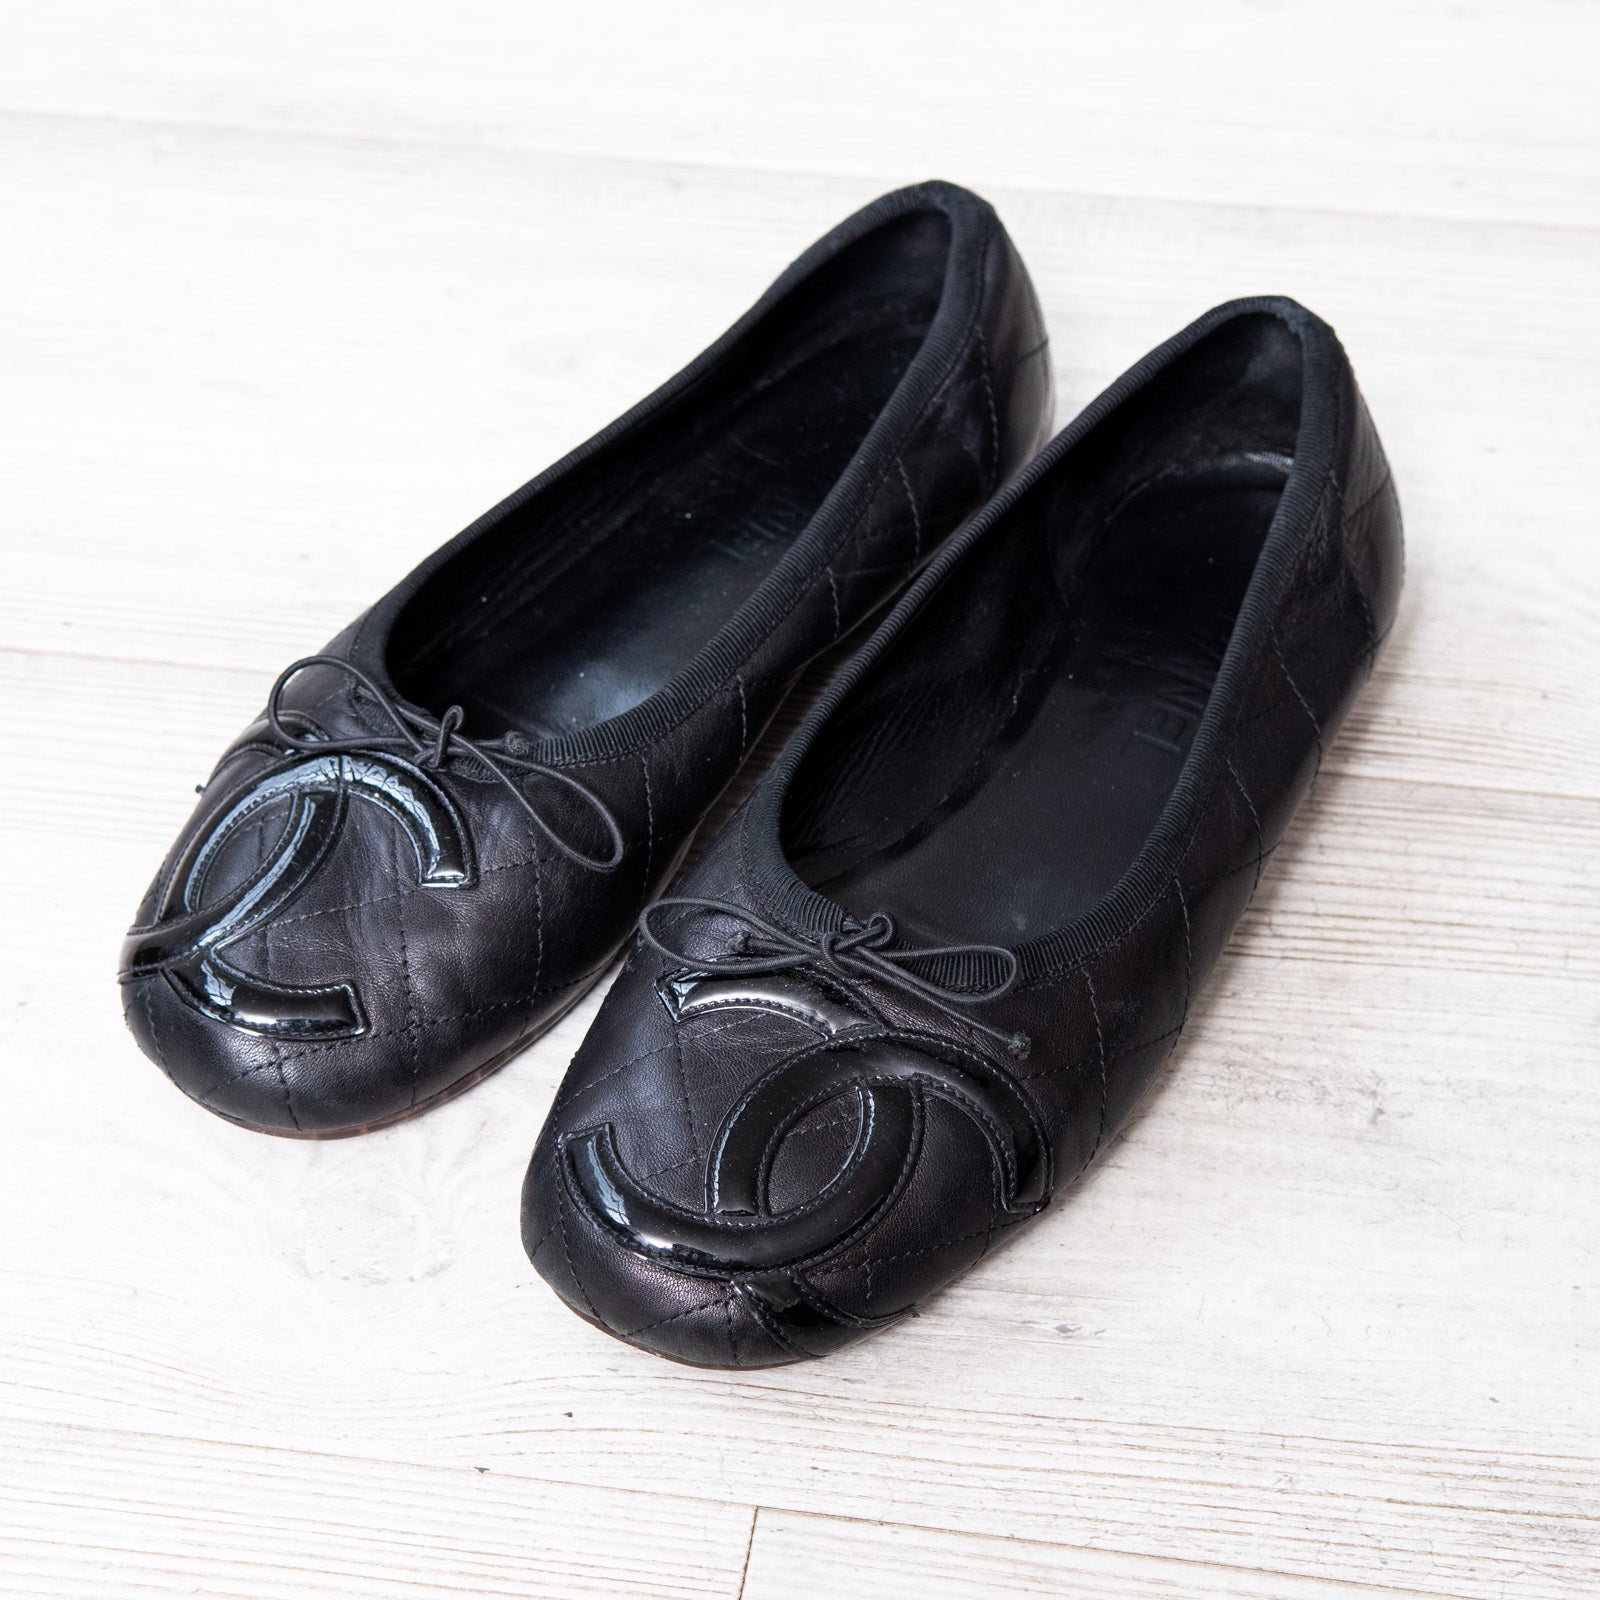 Chanel Black Leather Ballet Pumps - Image 4 of 6